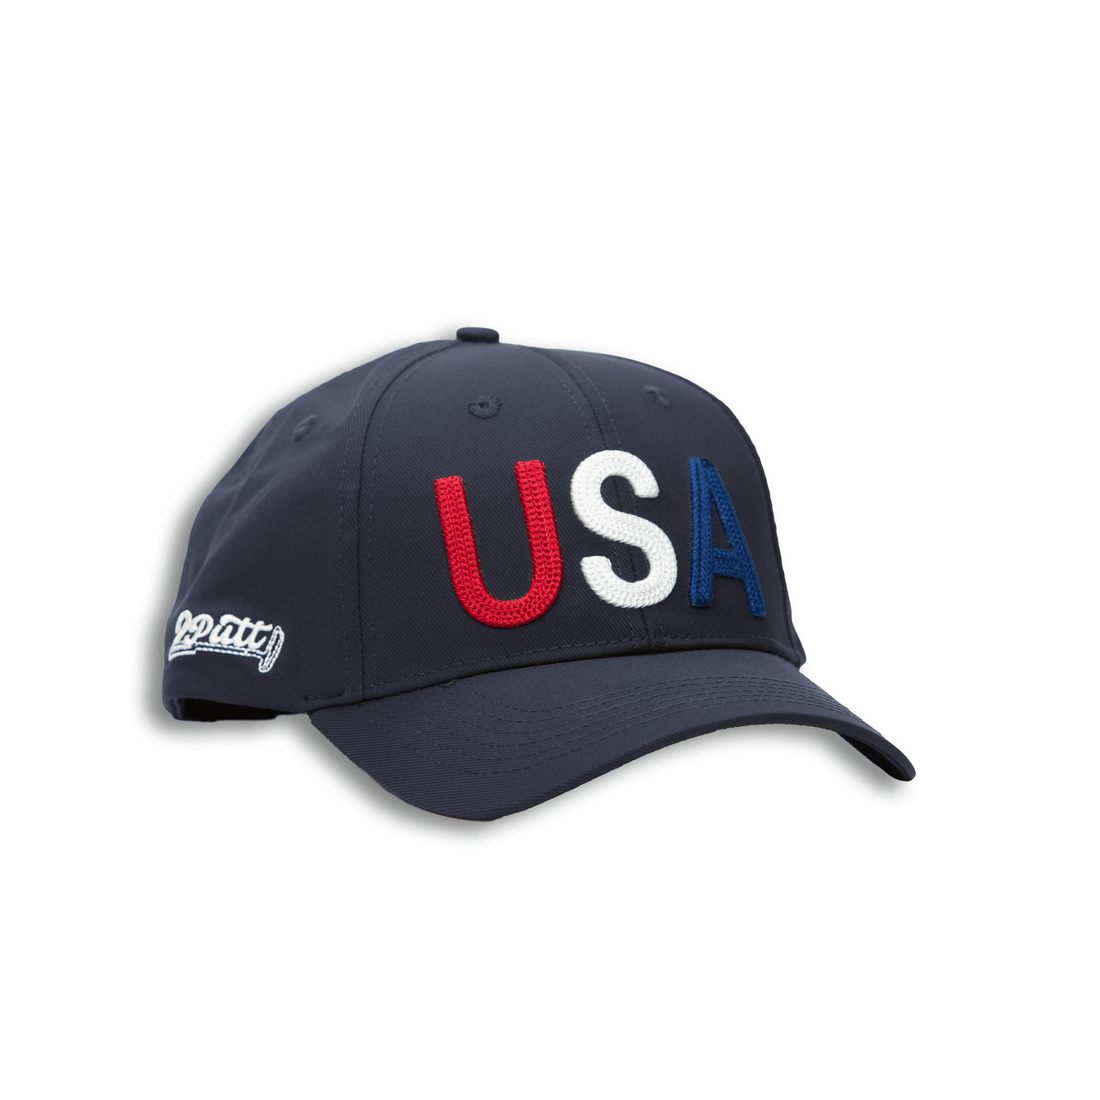 USA Hat - 2putt